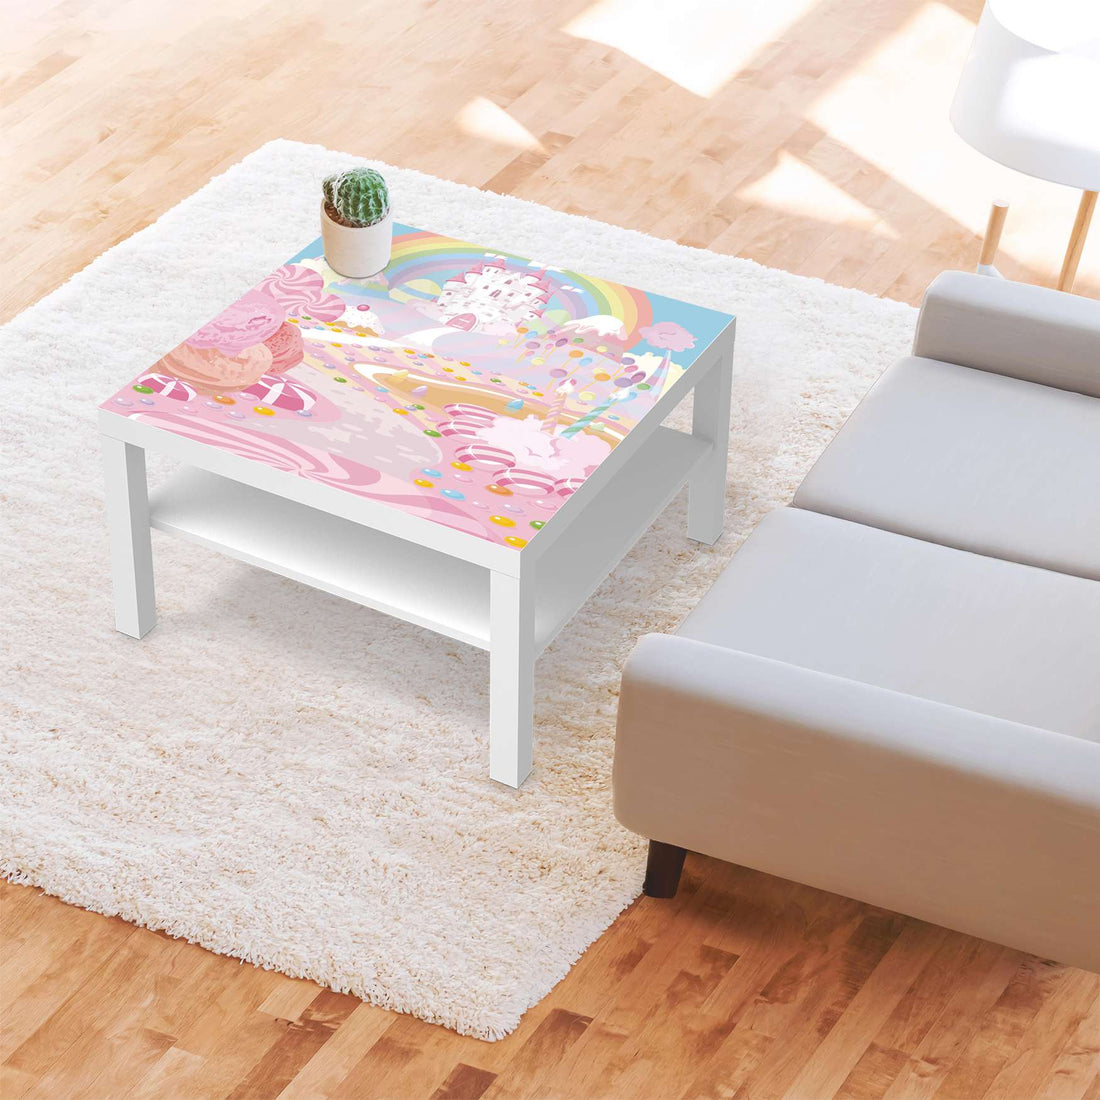 Selbstklebende Folie Candyland - IKEA Lack Tisch 78x78 cm - Kinderzimmer